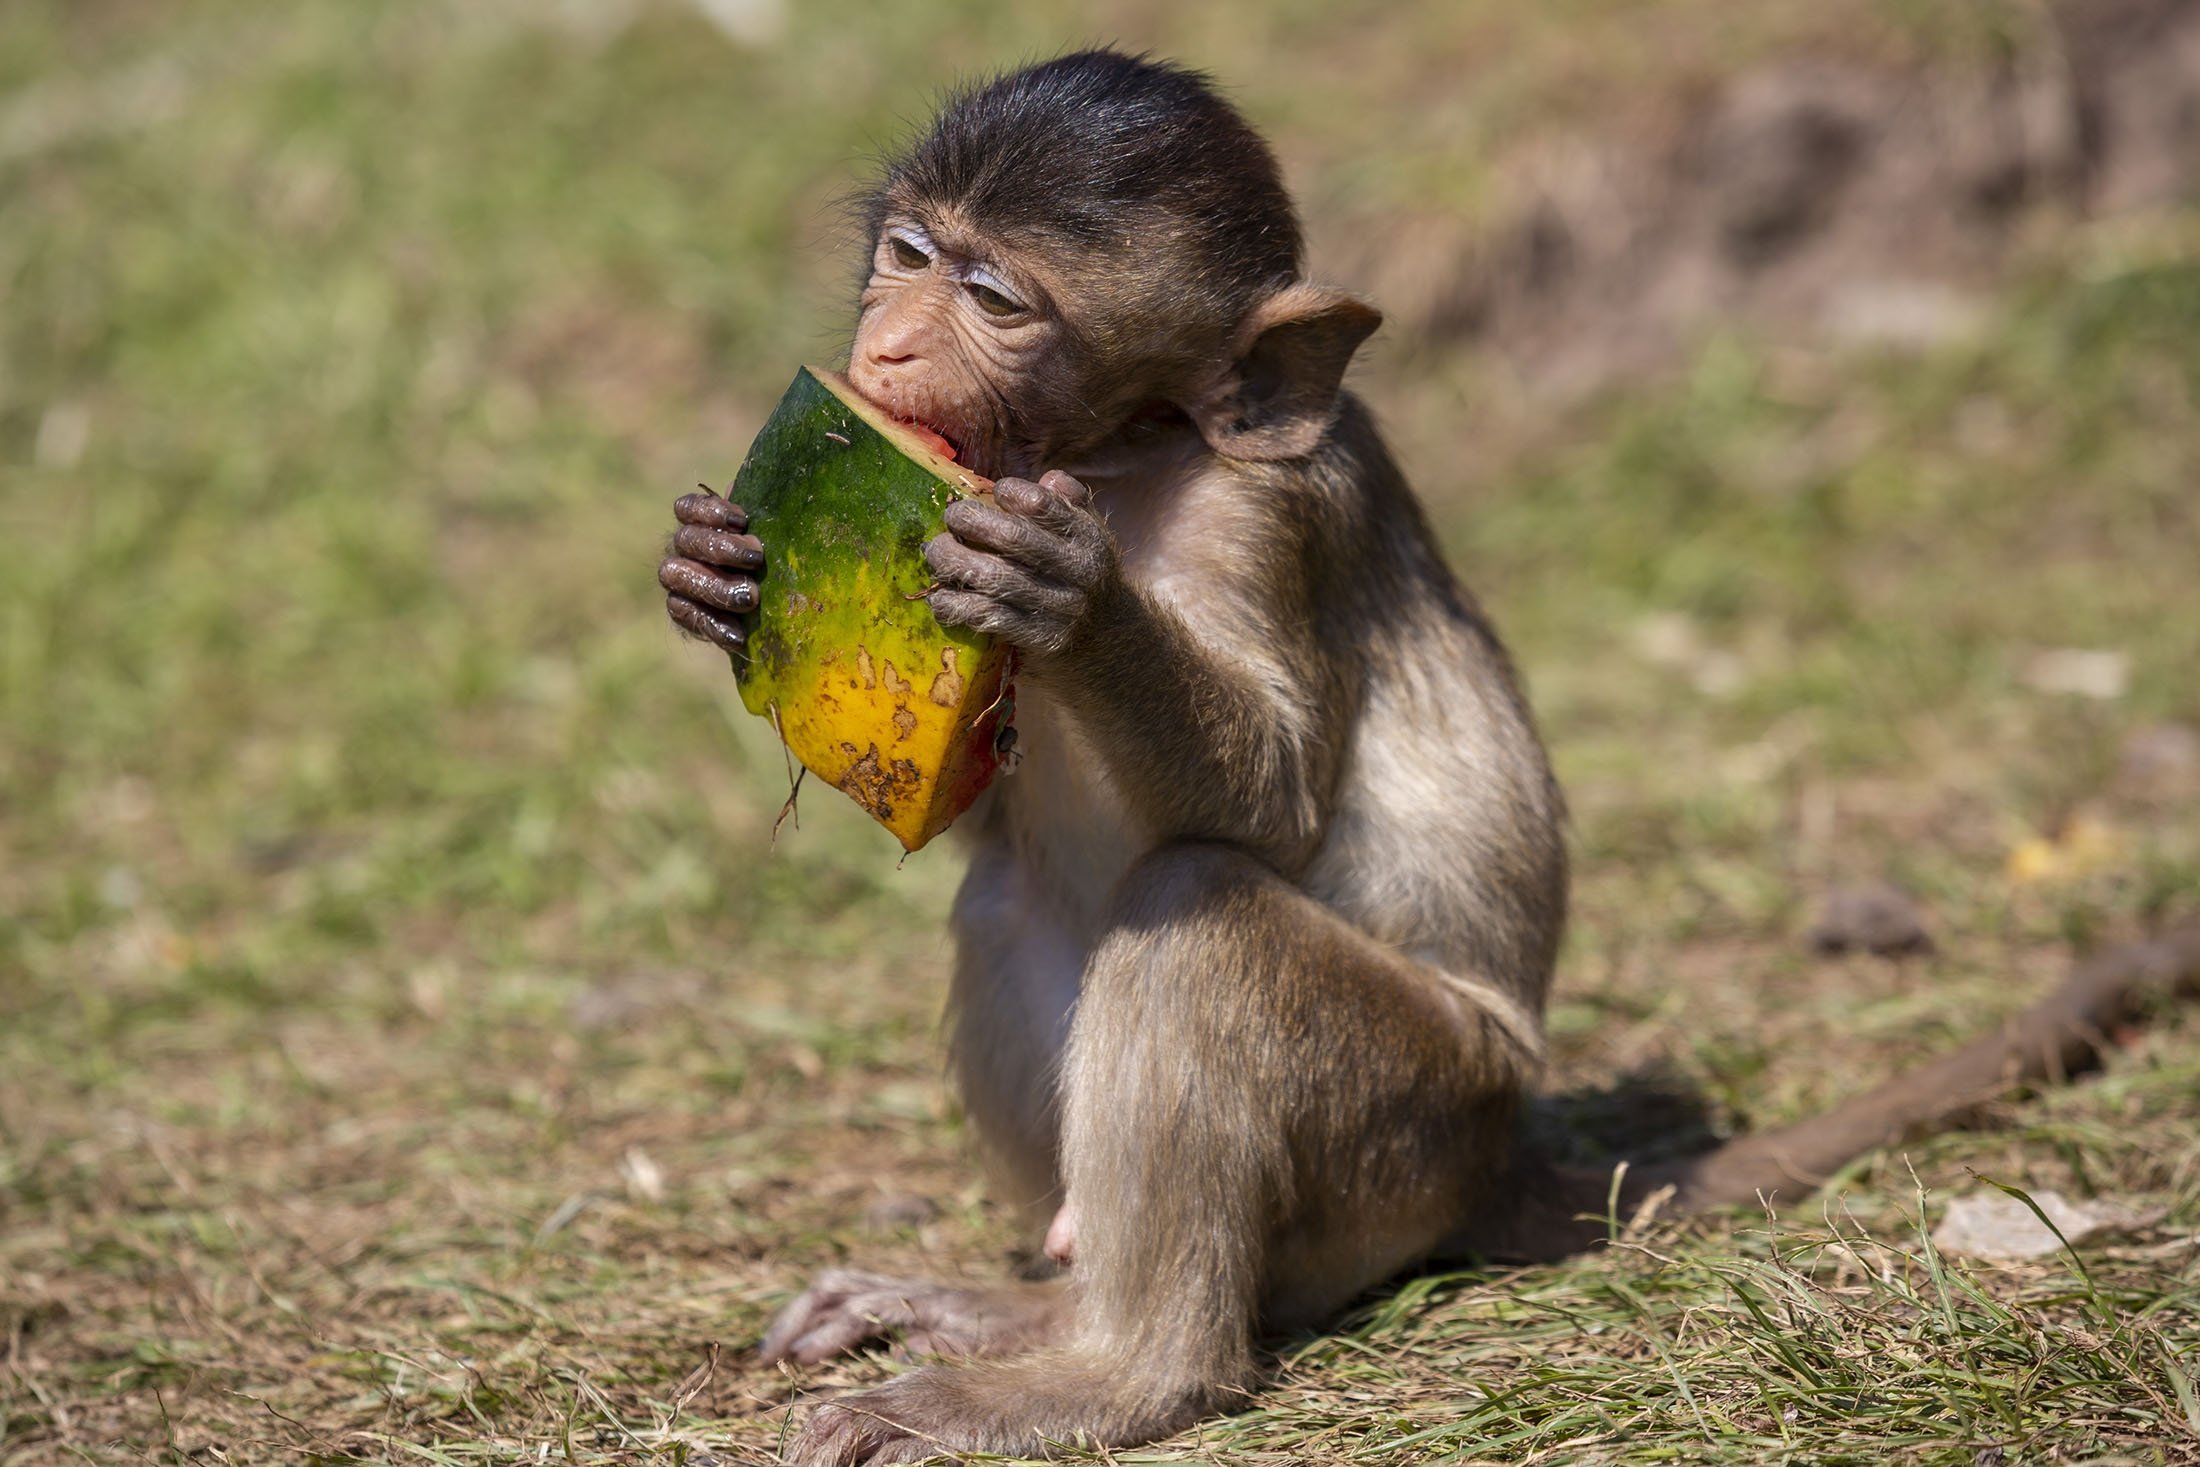 Primate banquet: Lopburi Monkey Festival celebrates reopening | Daily Sabah